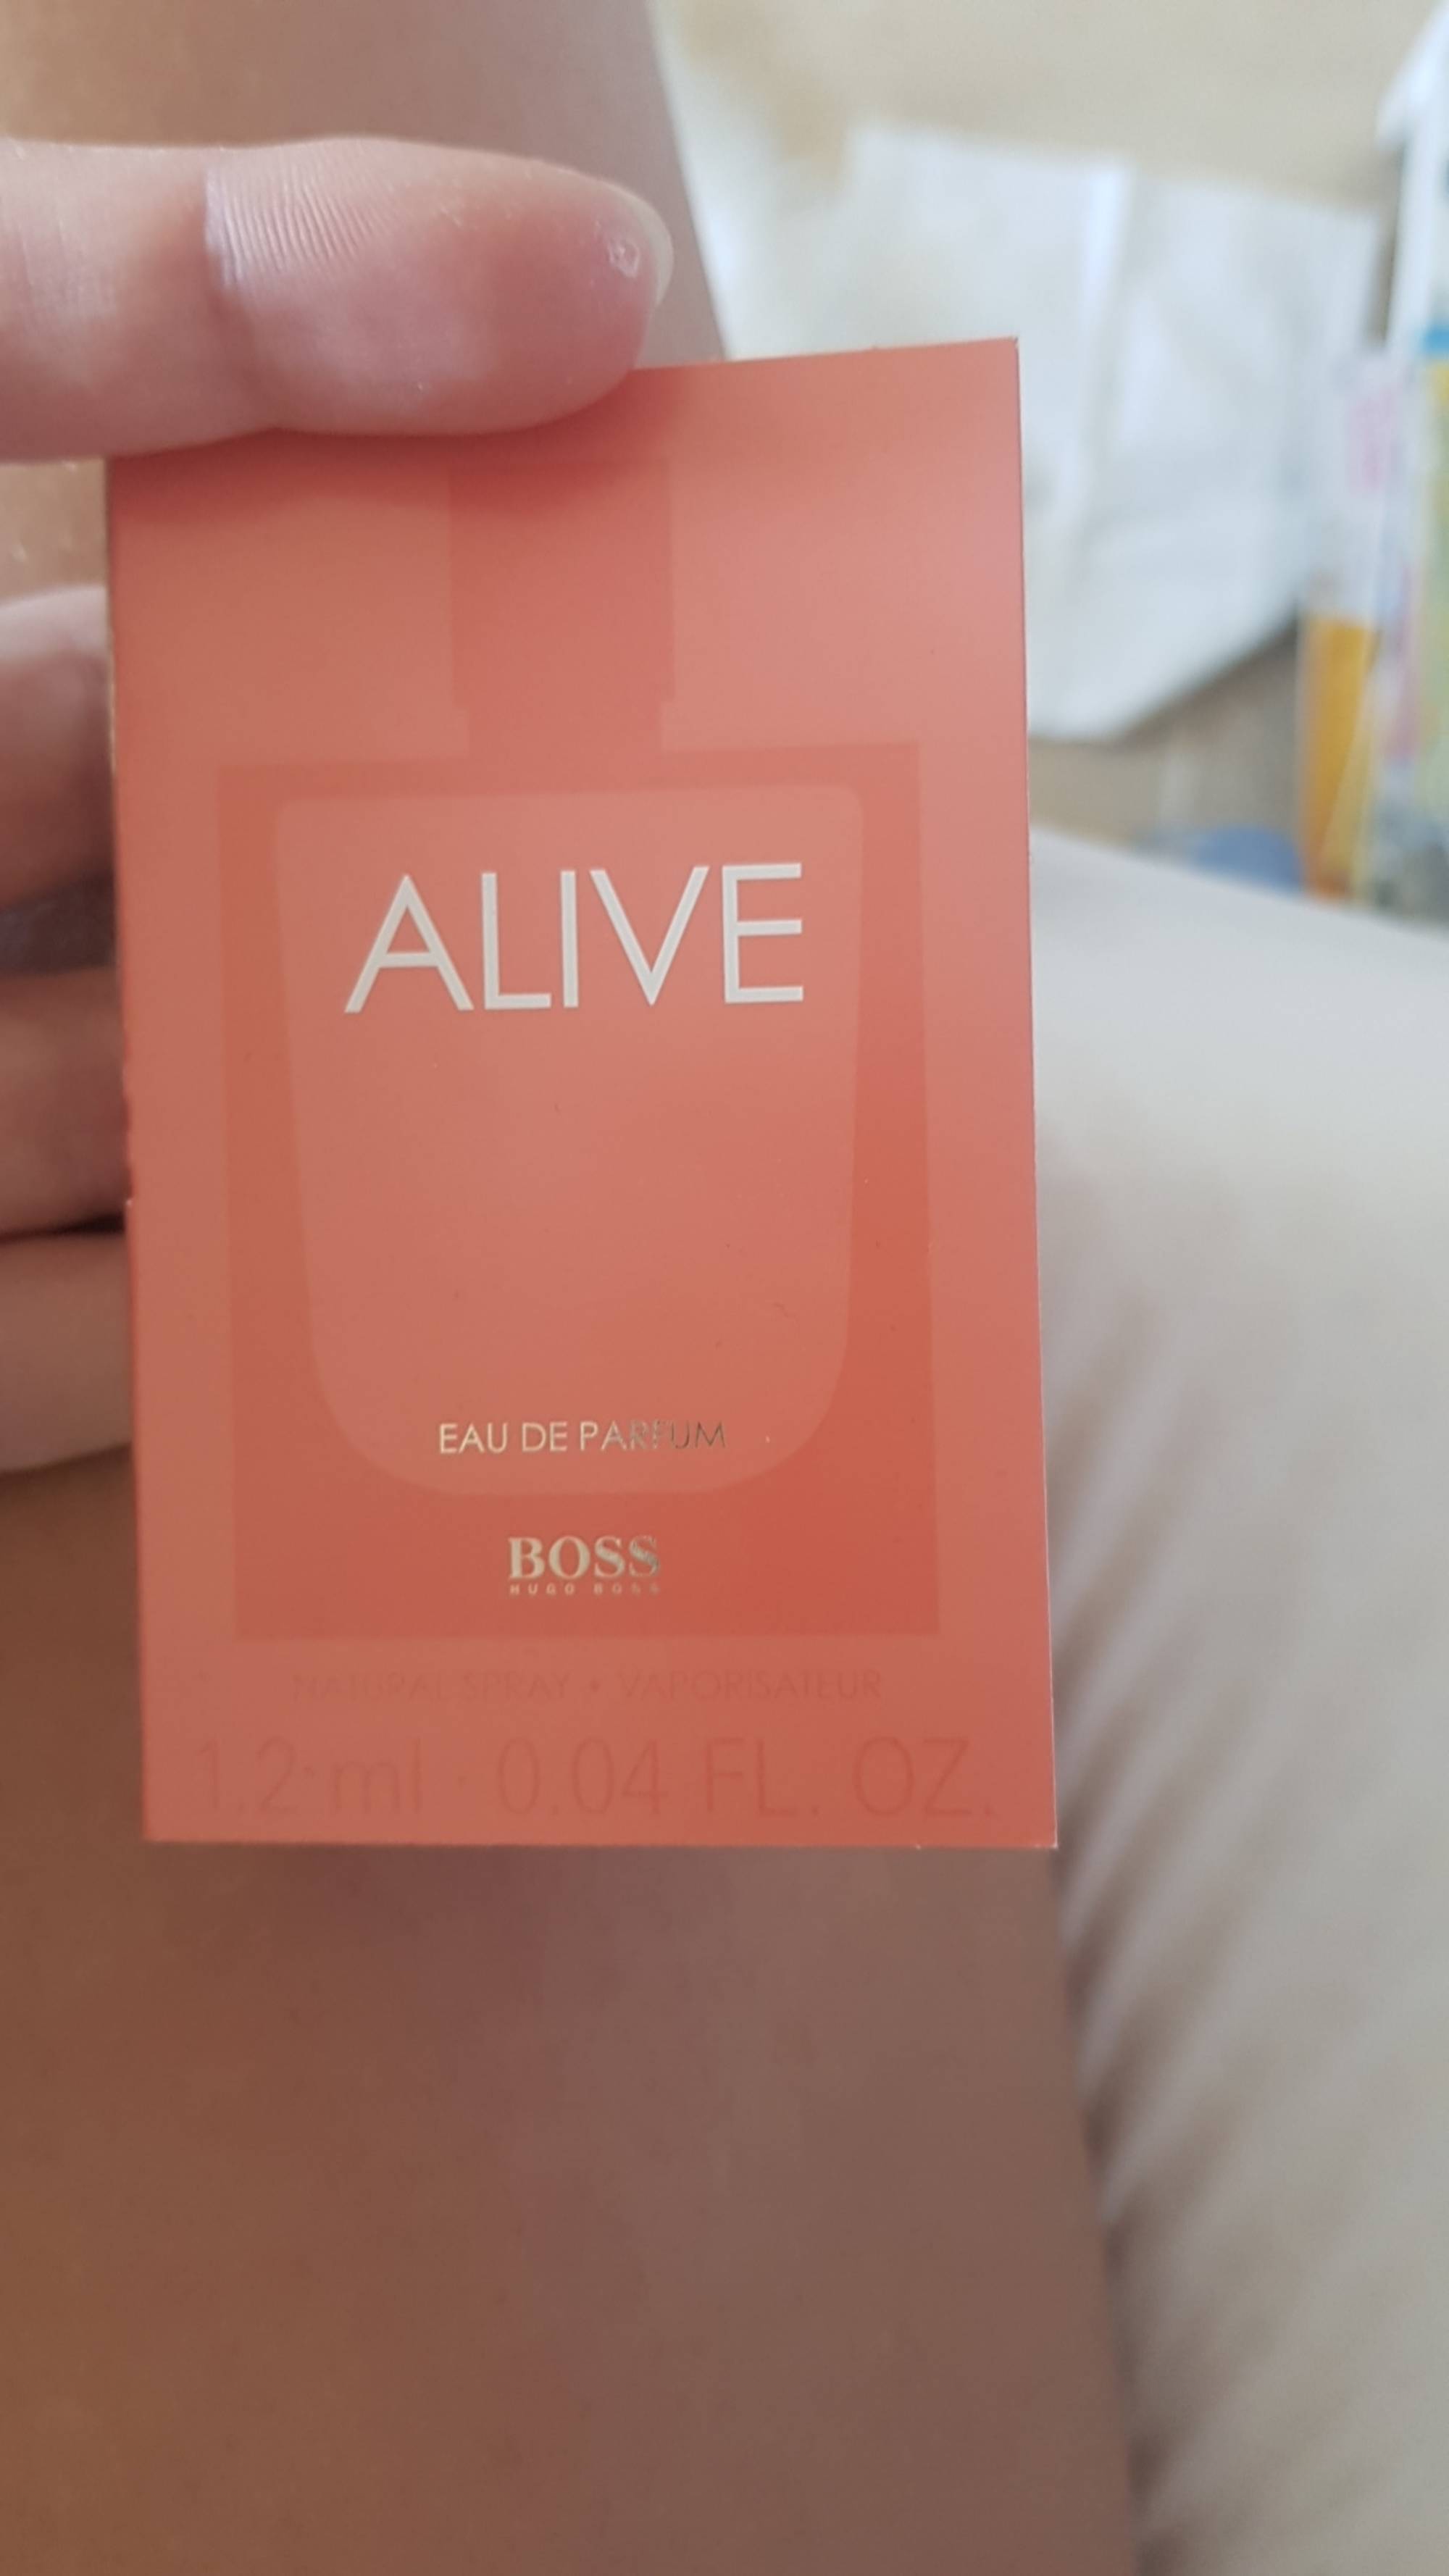 HUGO BOSS - Alive - Eau de parfum